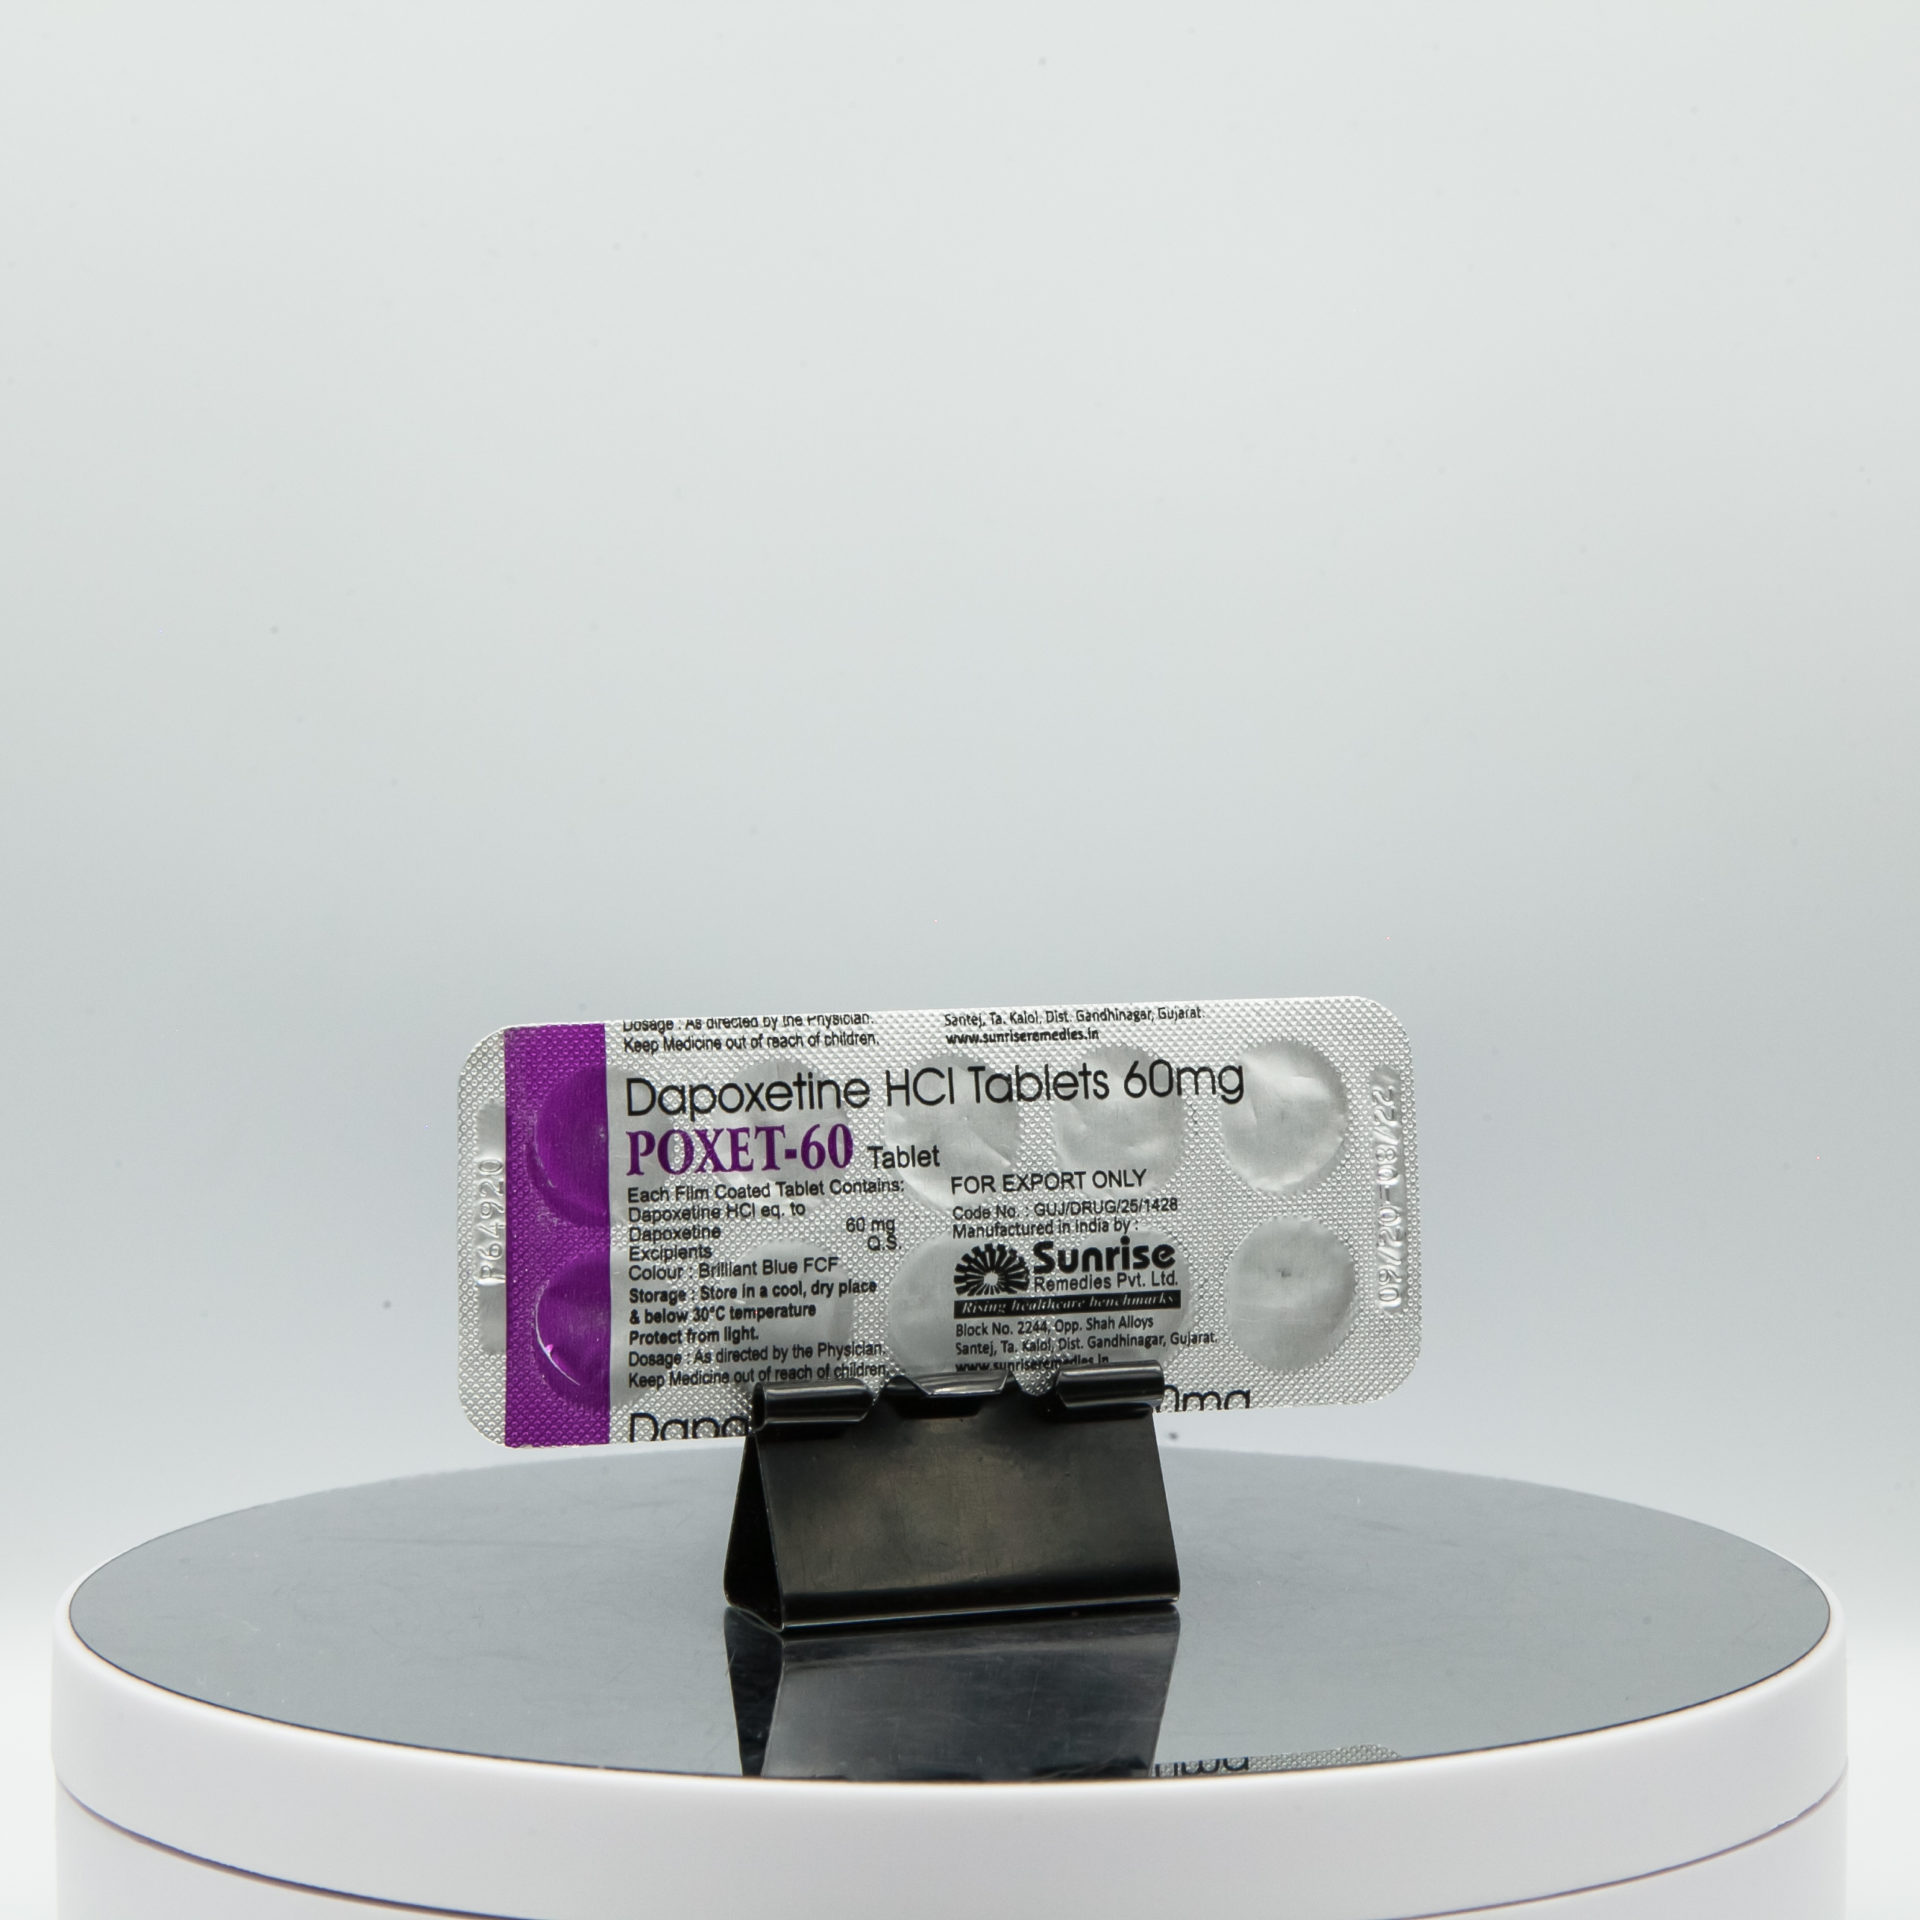 Poxet-60 (Dapoxetine HCI Tablets) 60 mg Sunrise Dapoxetine (Priligy) 7